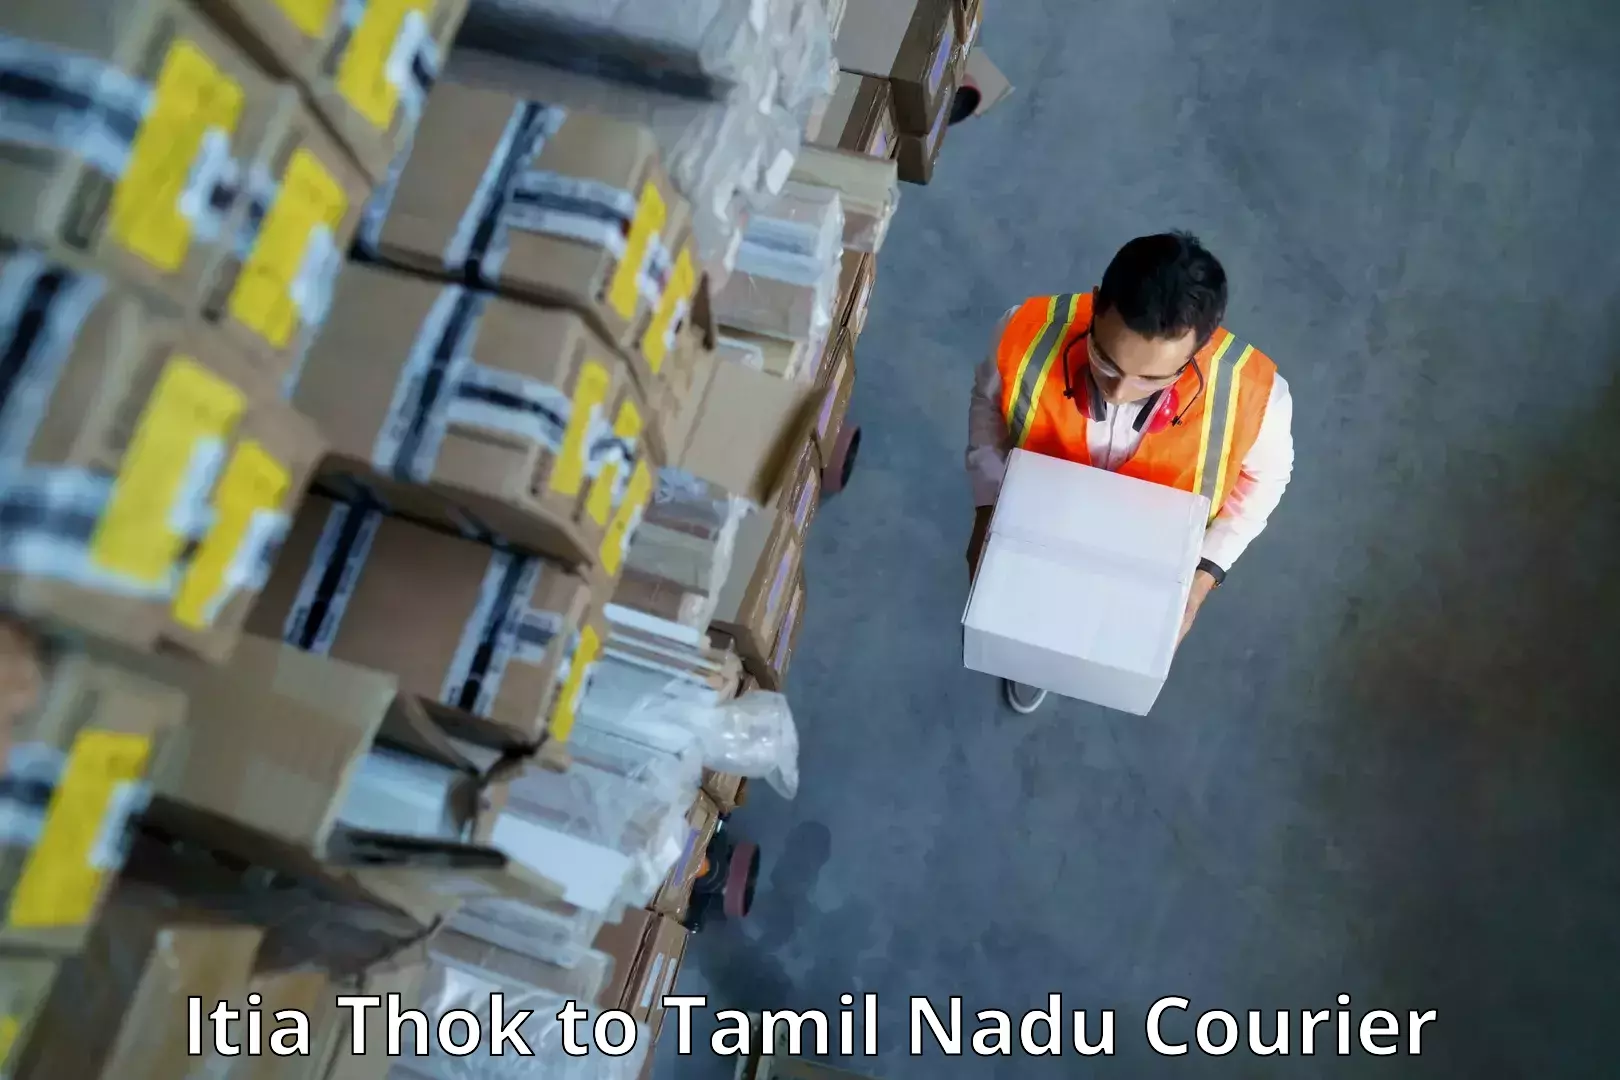 Global shipping networks Itia Thok to Chennai Port